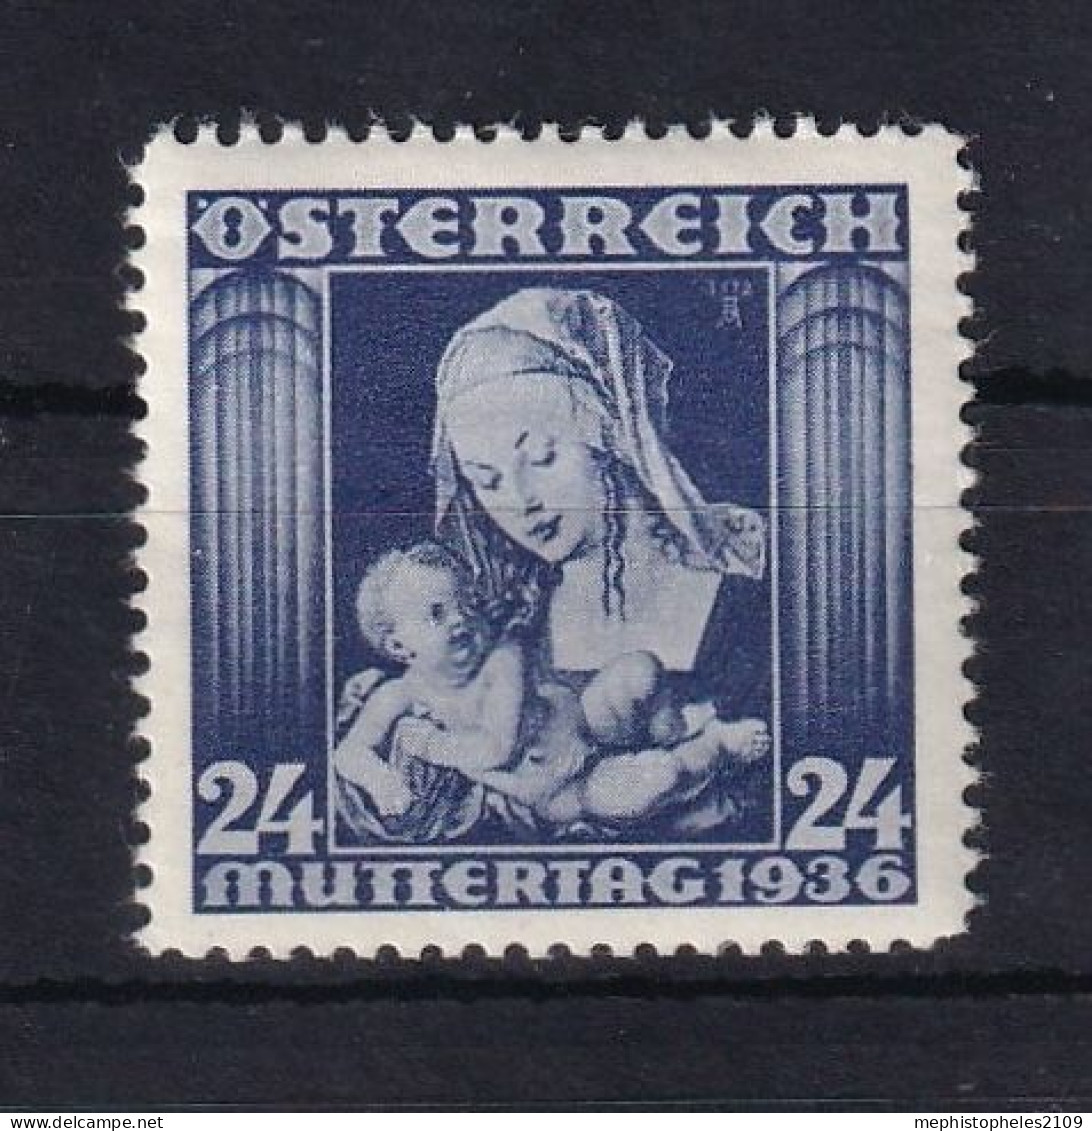 AUSTRIA 1936 - MNH - ANK 627 - Muttertag - Usati